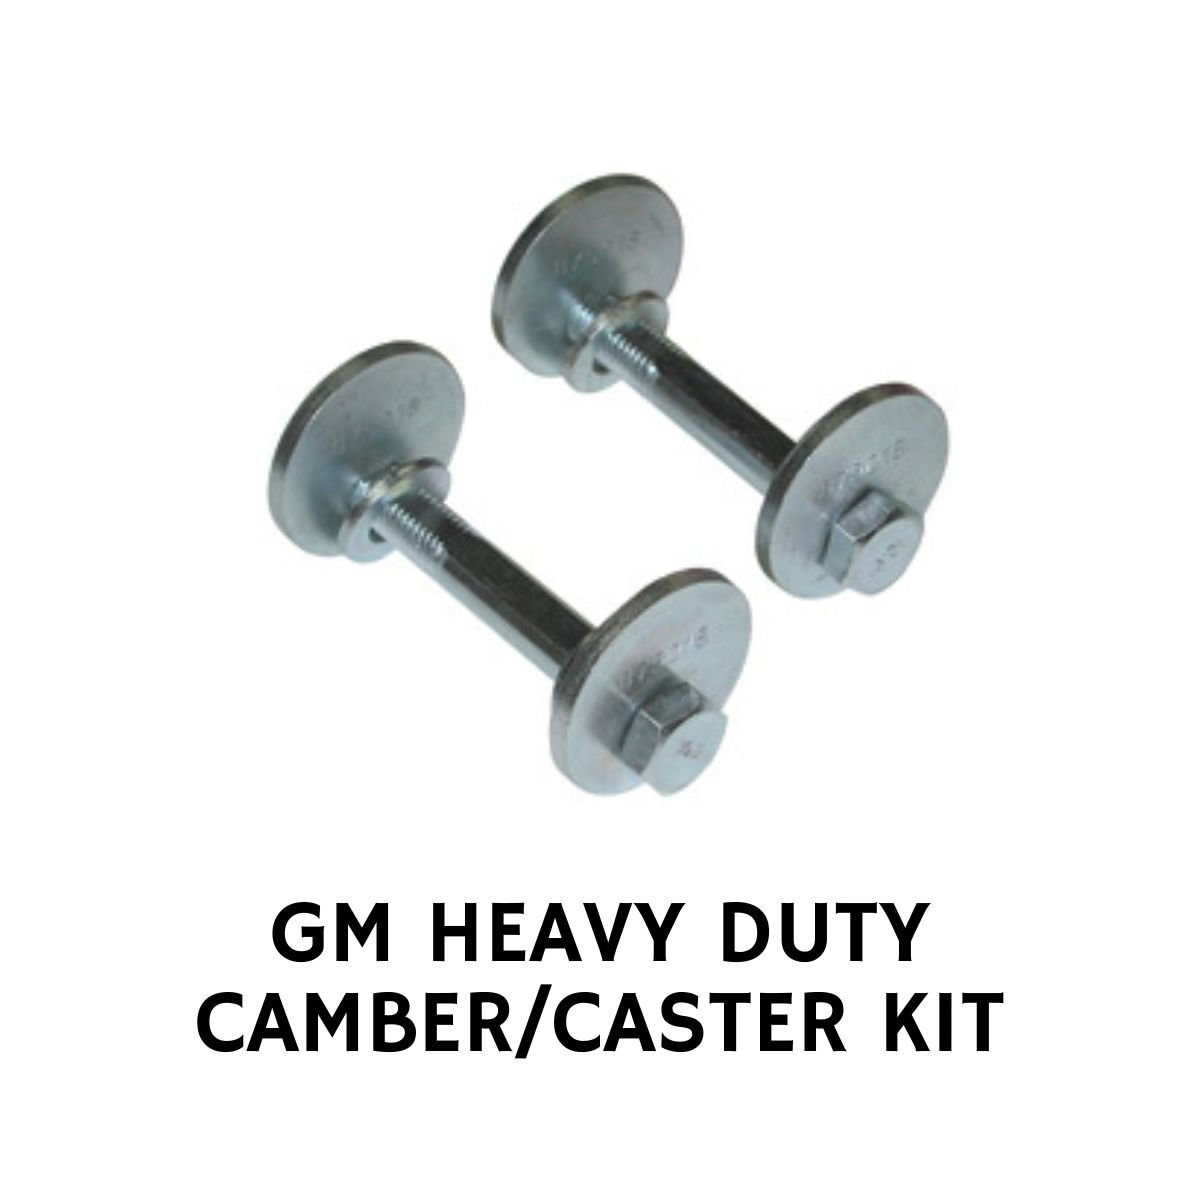 GM HEAVY DUTY CAMBER/CASTER KIT